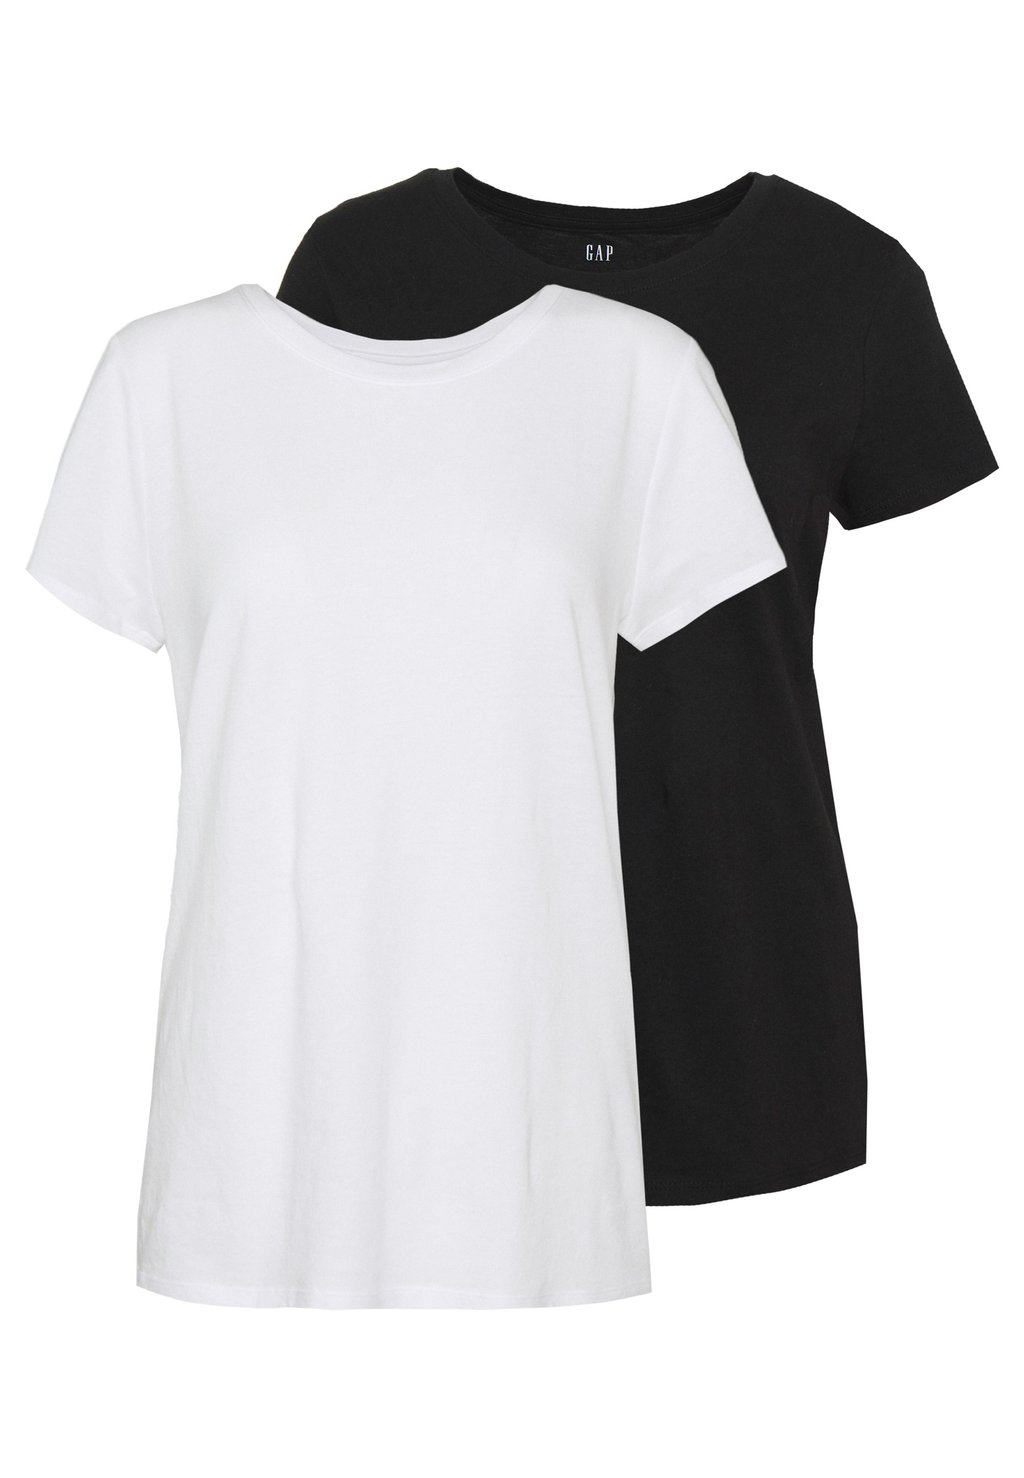 Базовая футболка GAP, черный базовая футболка gap